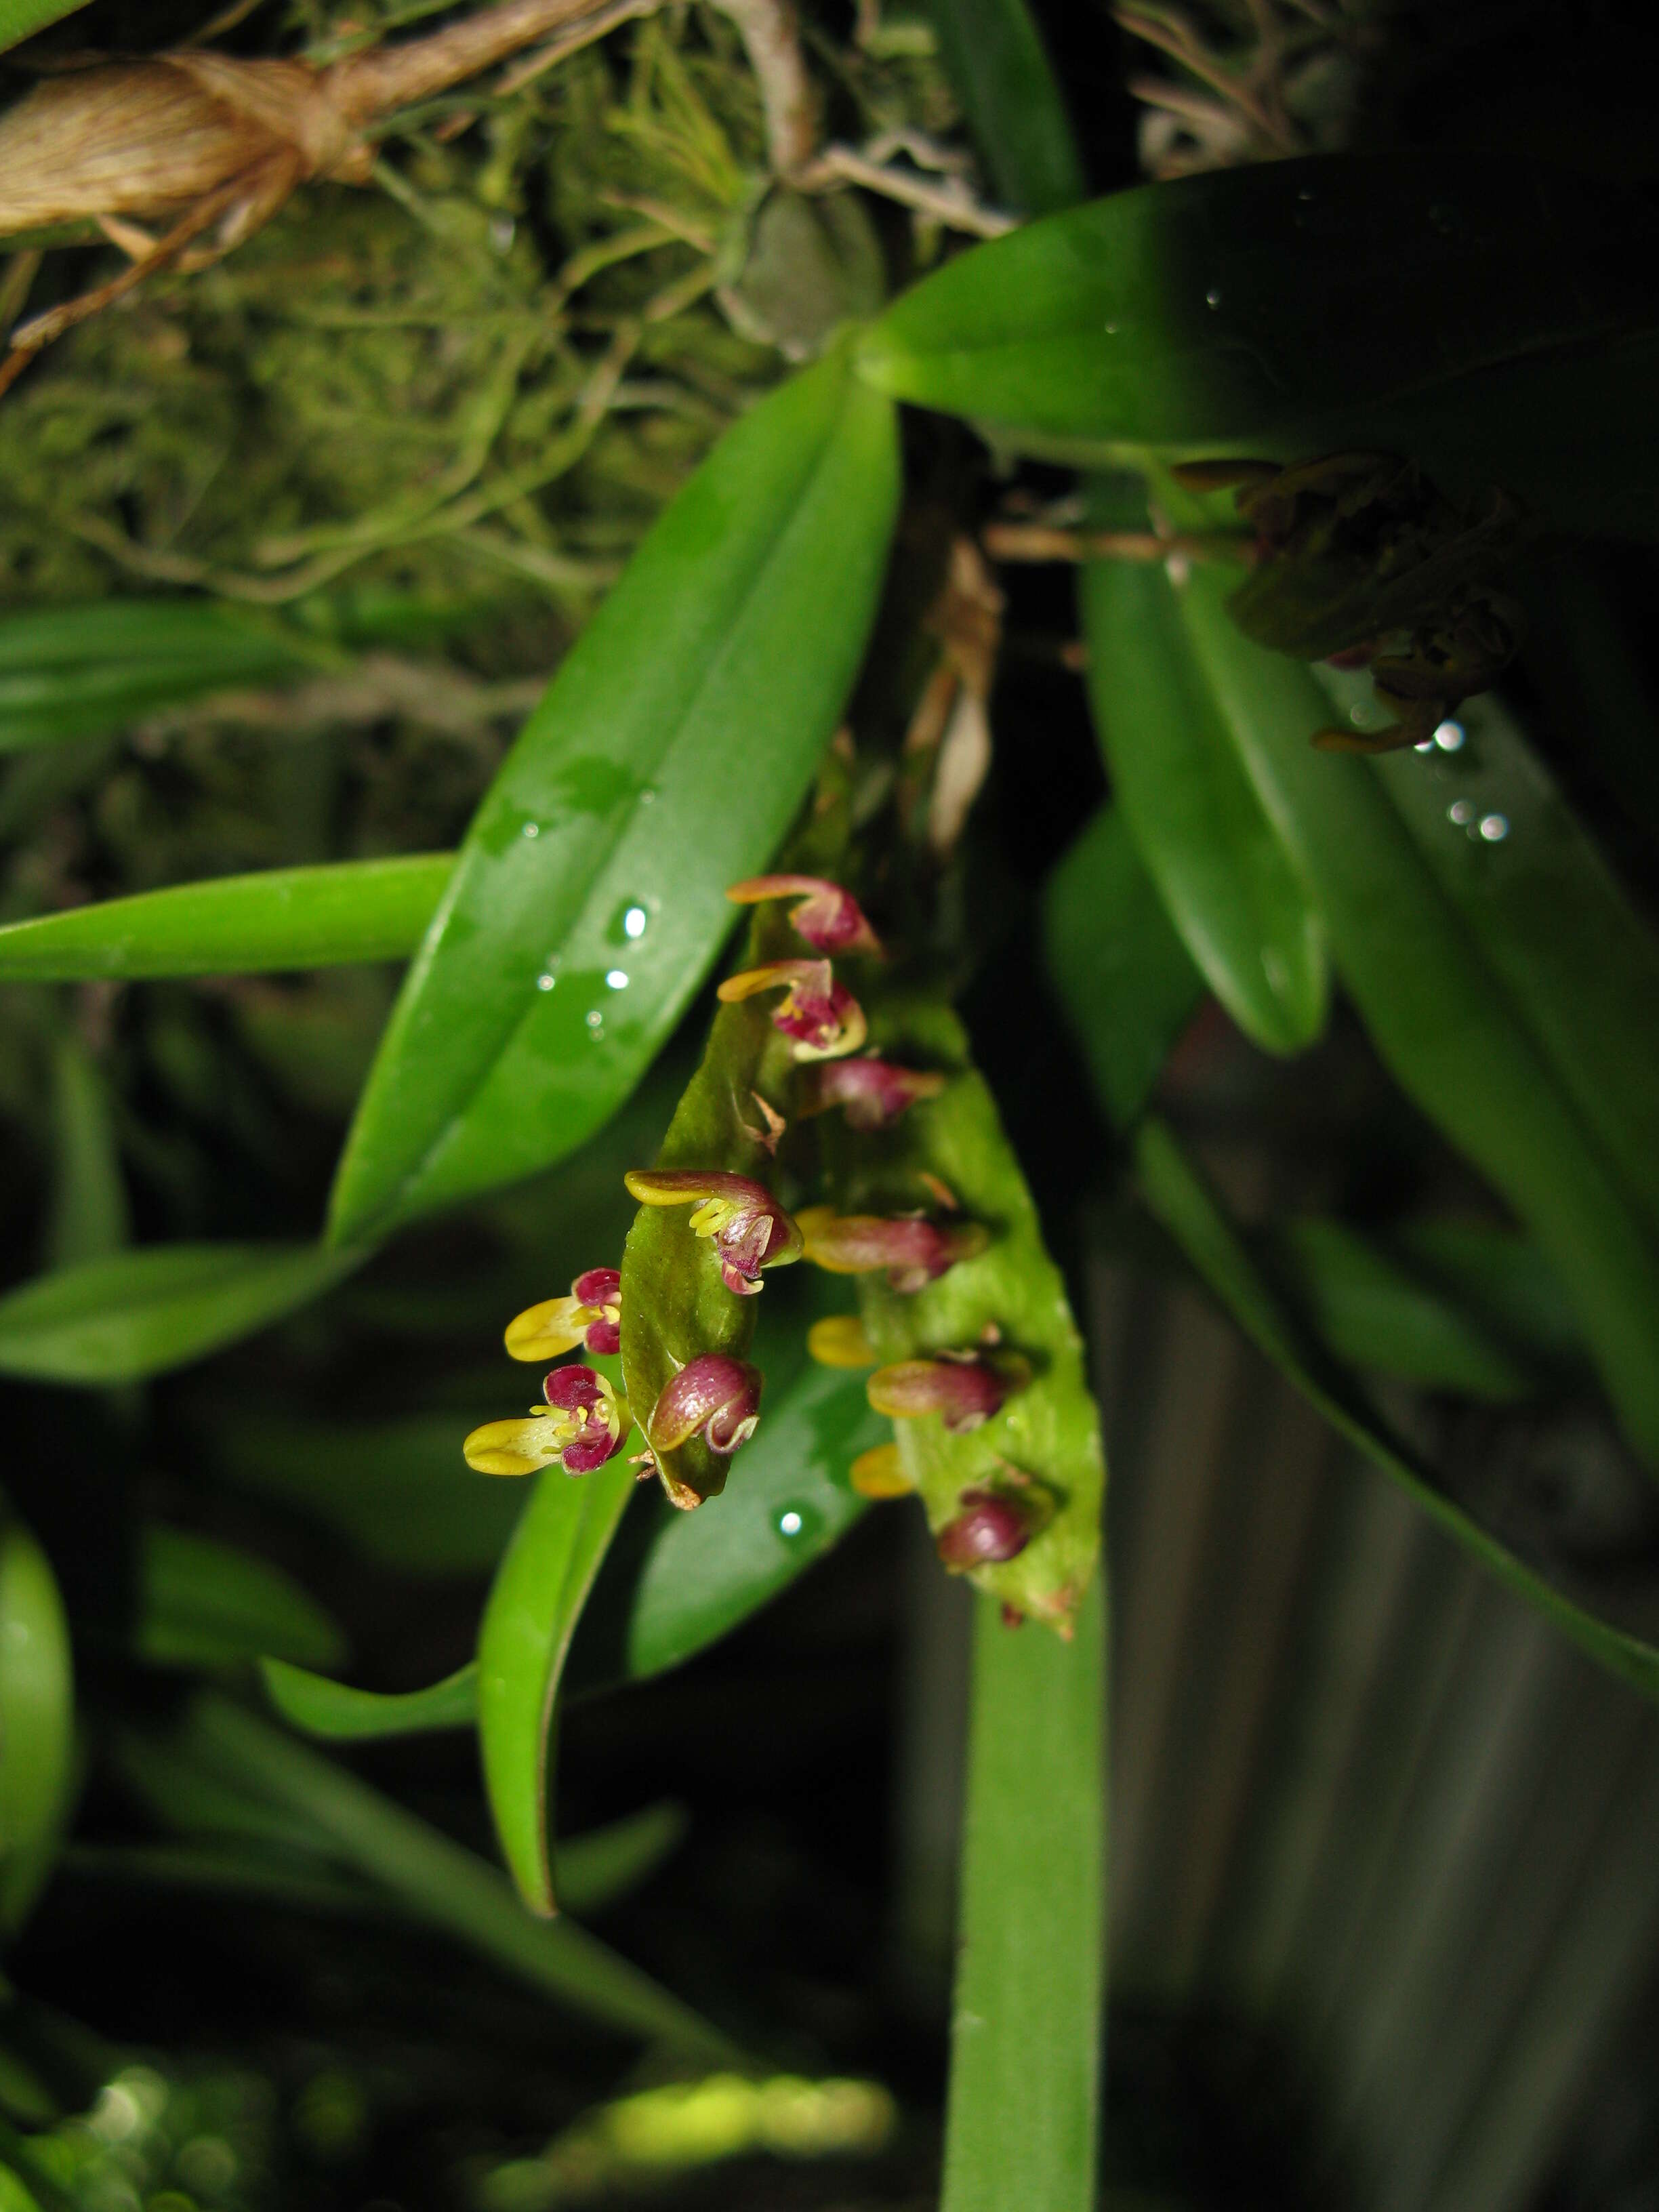 Image de Bulbophyllum falcatum (Lindl.) Rchb. fil.